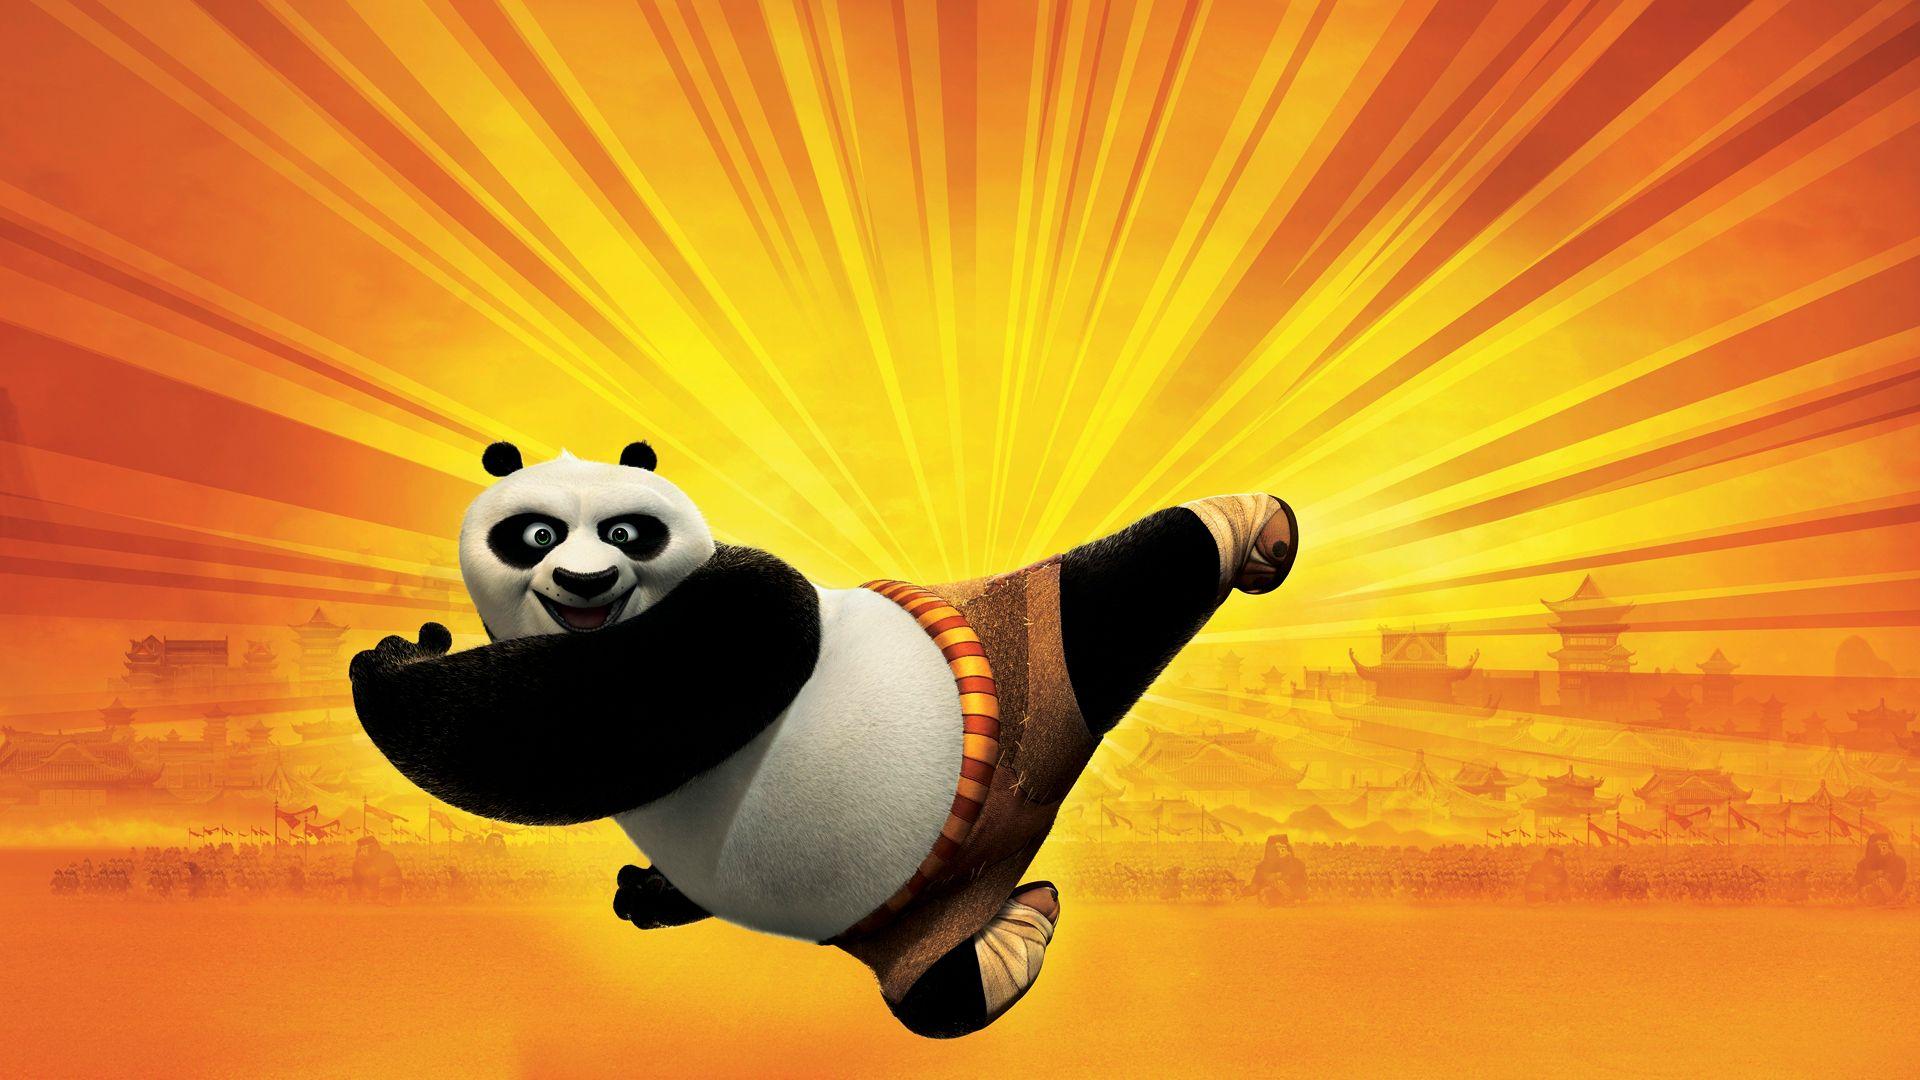 Kung Fu Panda Wallpaper 15287 1920x1080 px